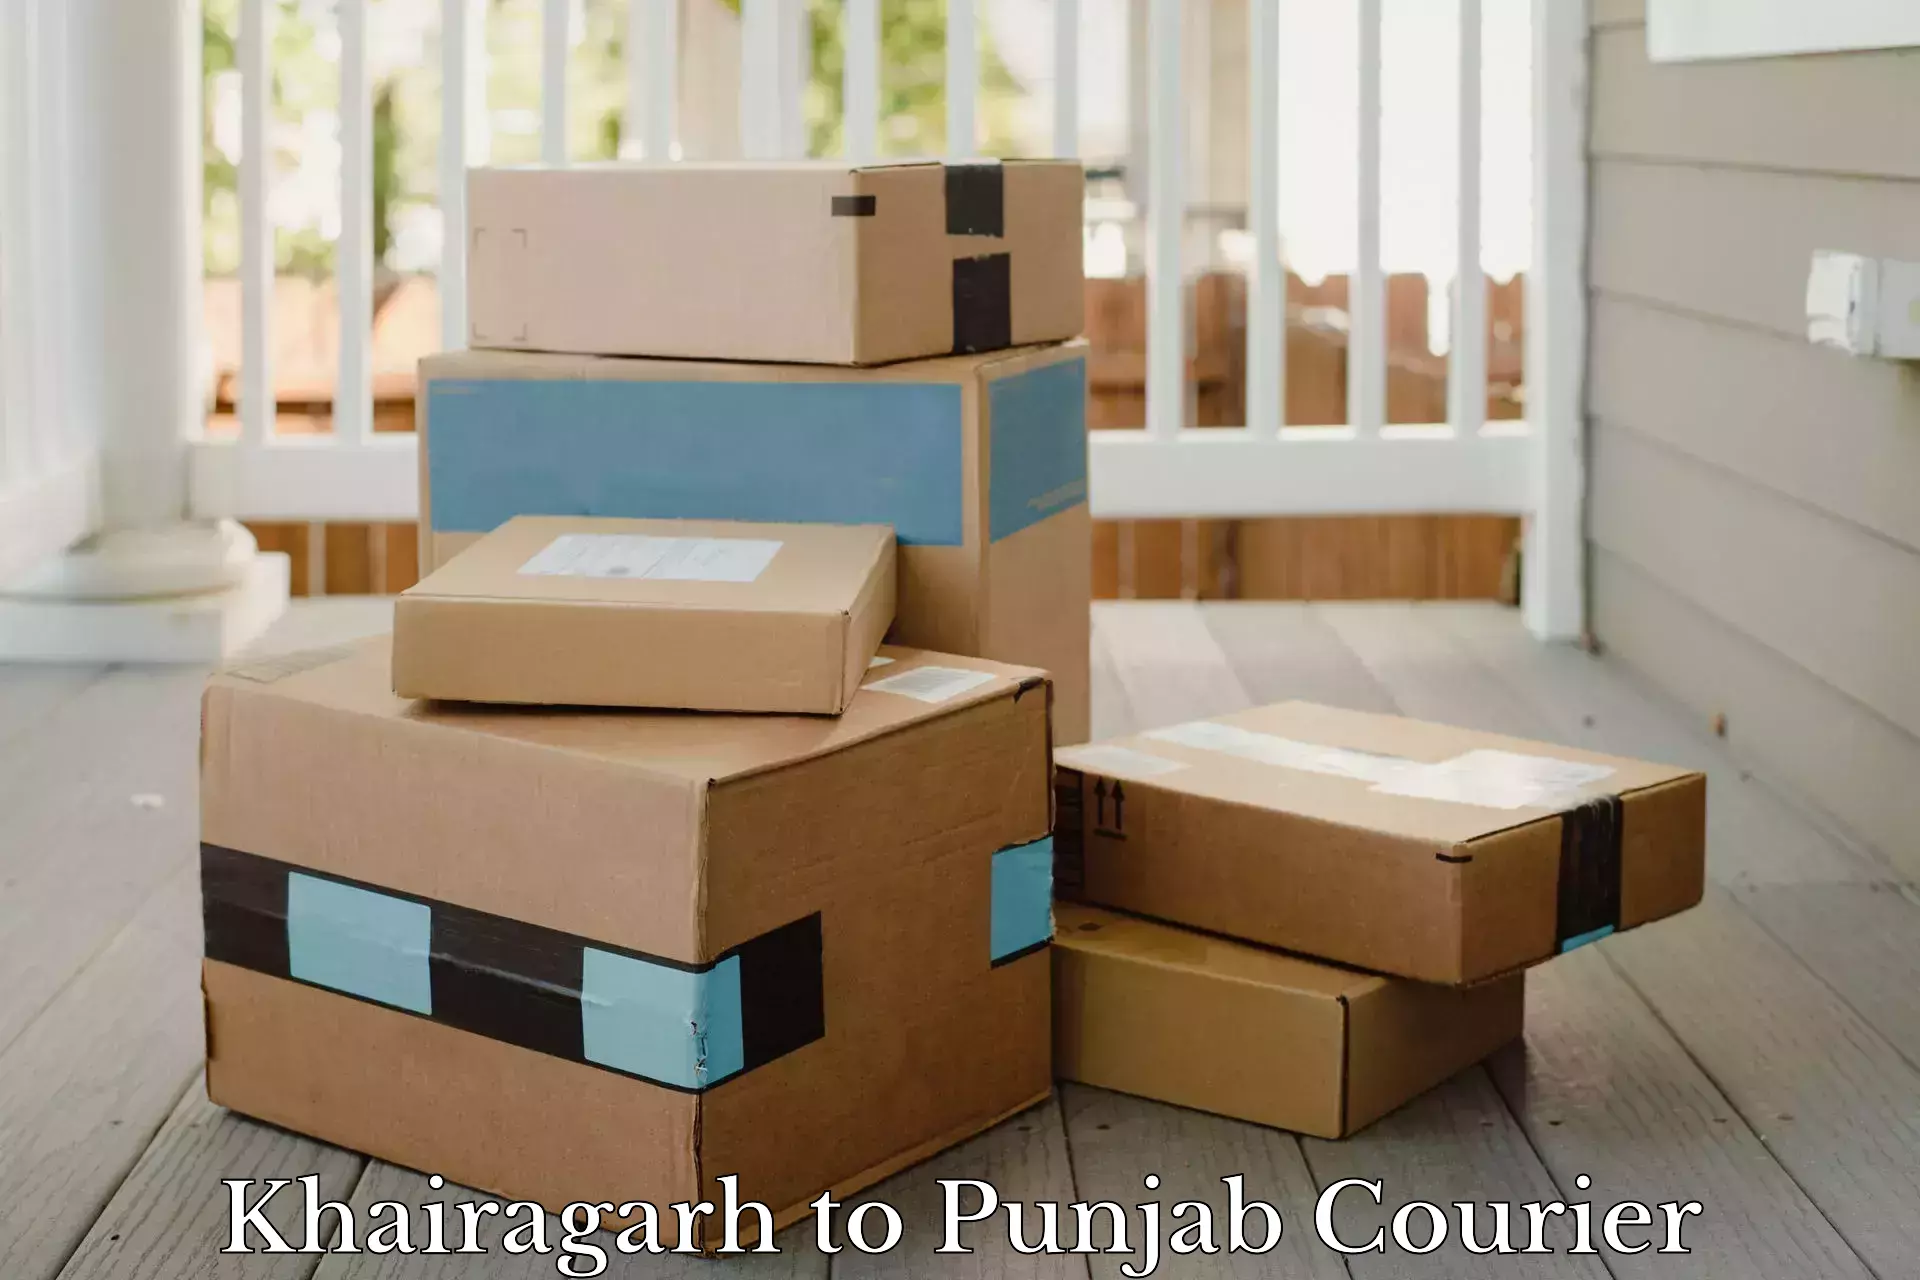 Courier service efficiency Khairagarh to Punjab